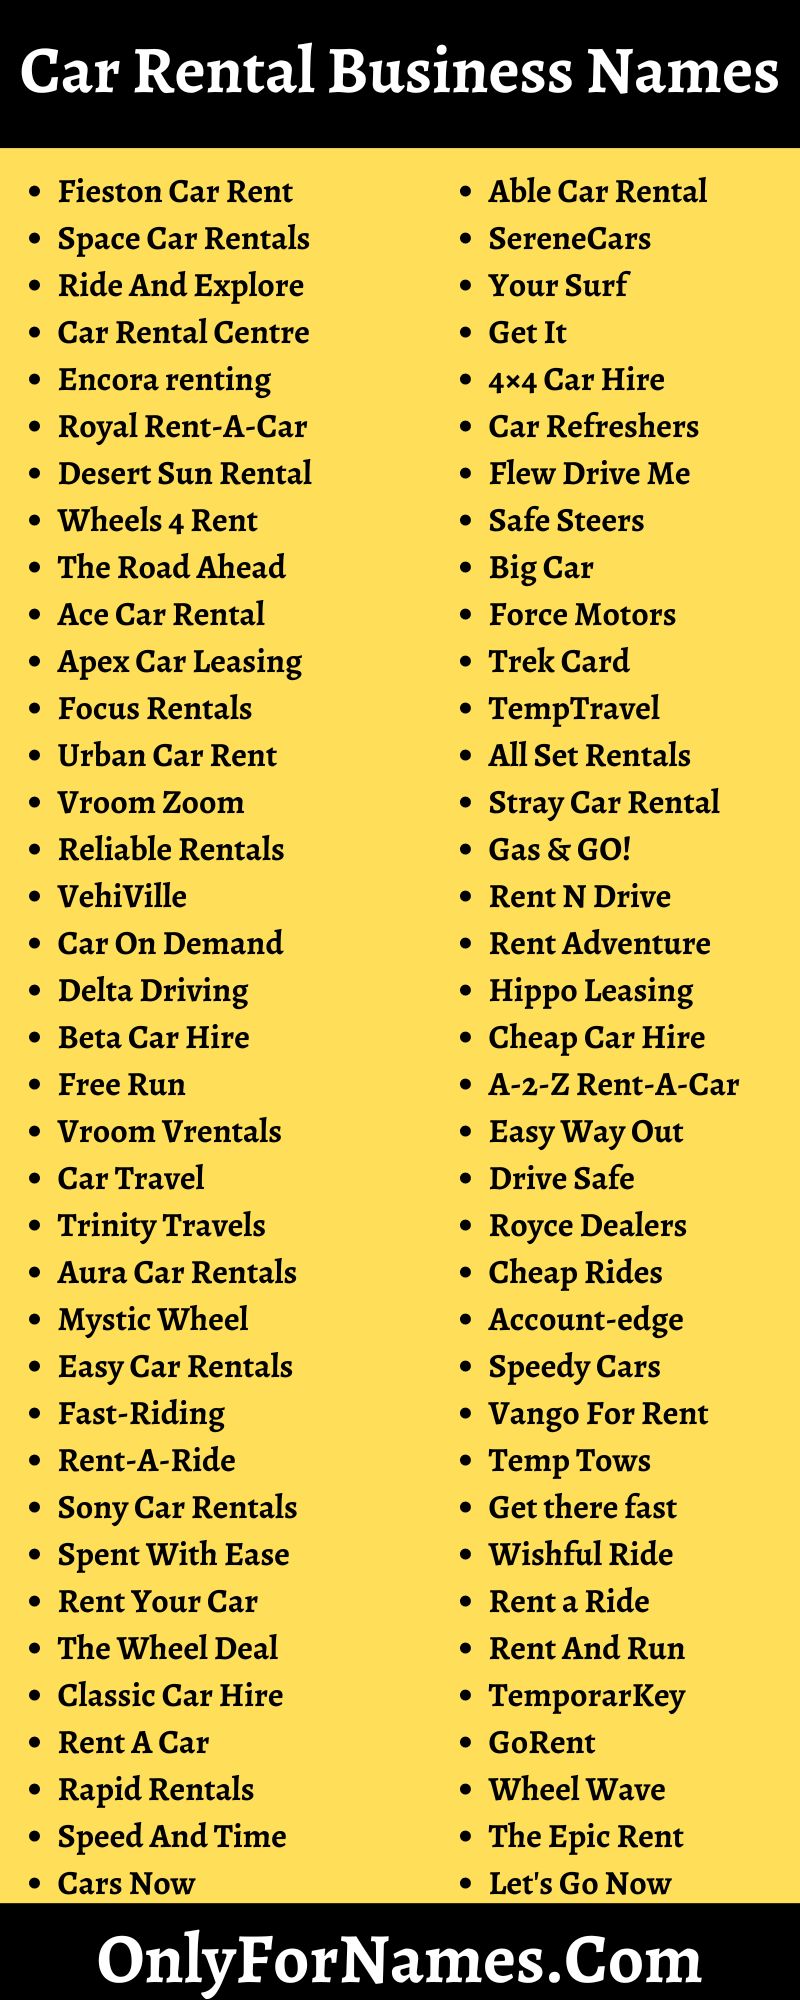 Car Rental Business Names